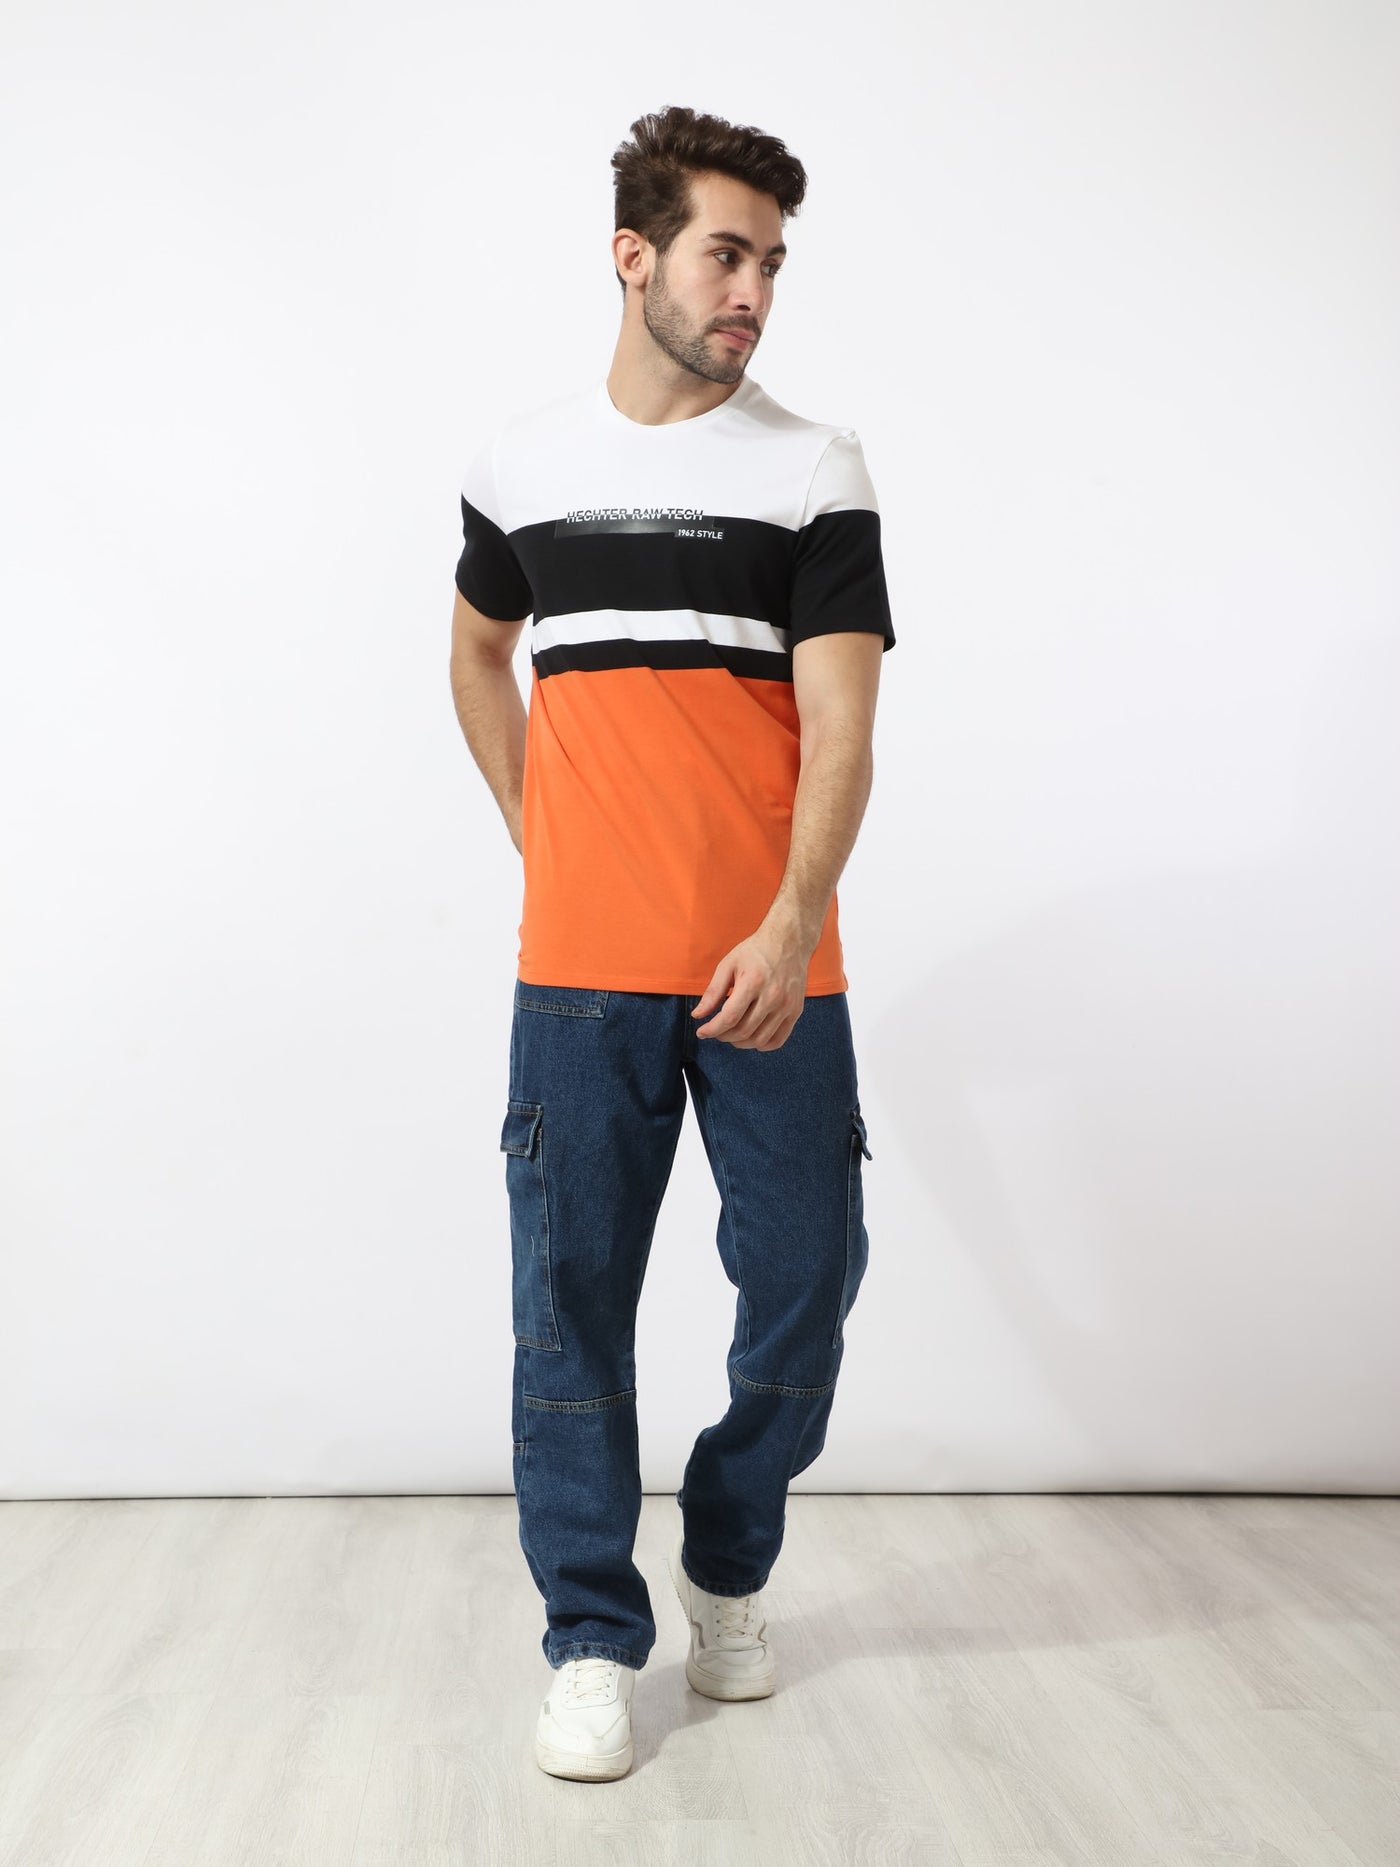 T-Shirt - Striped - Tri-toned